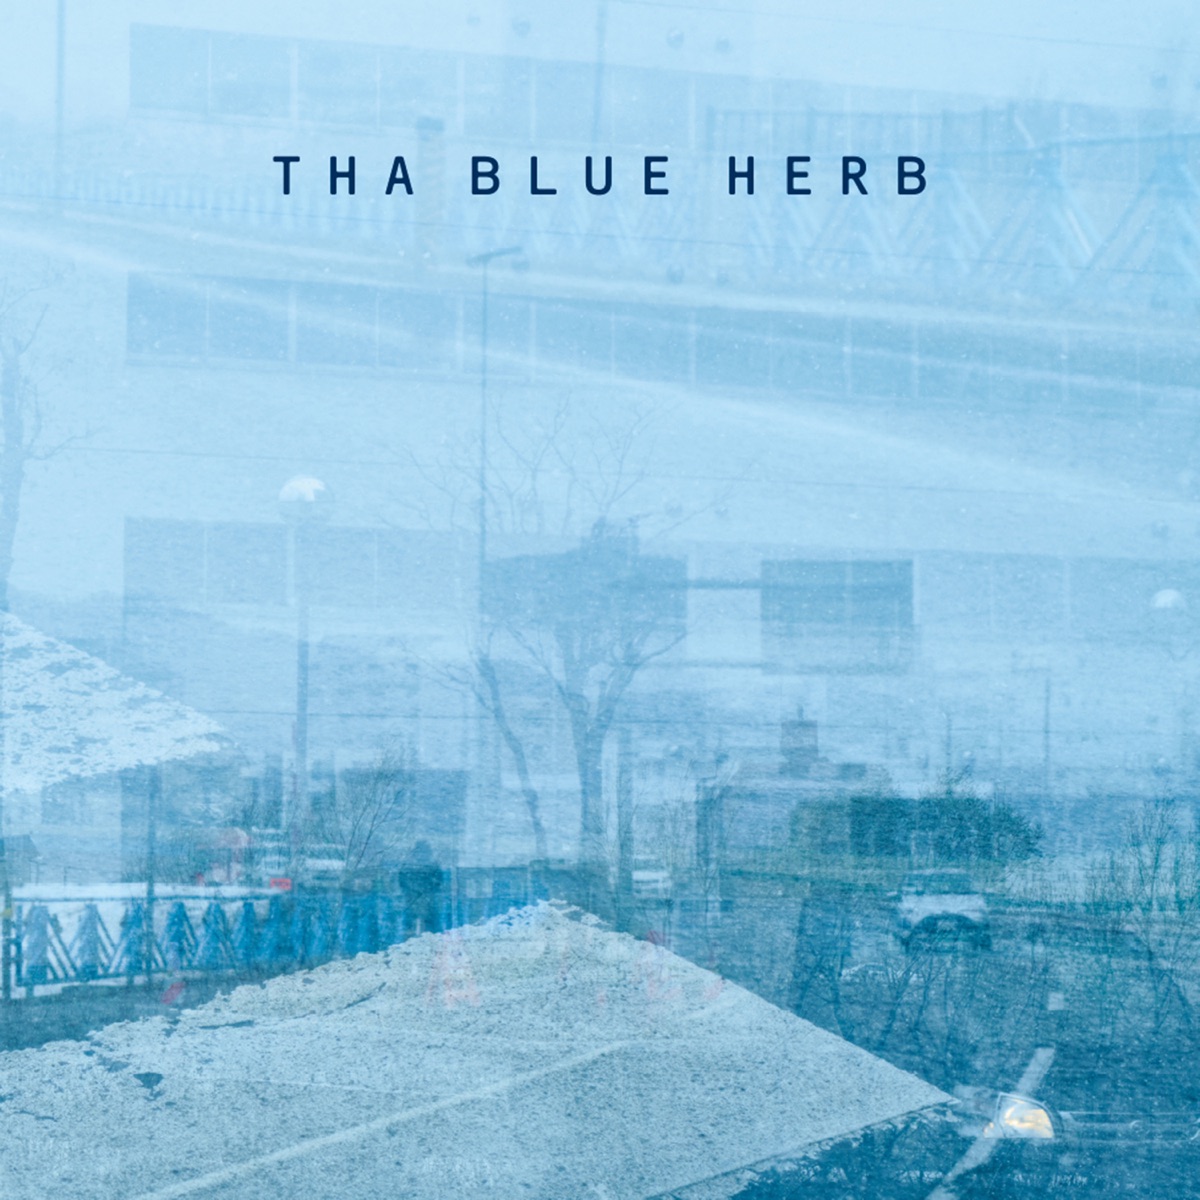 Stilling, Still Dreaming - Album by THA BLUE HERB - Apple Music